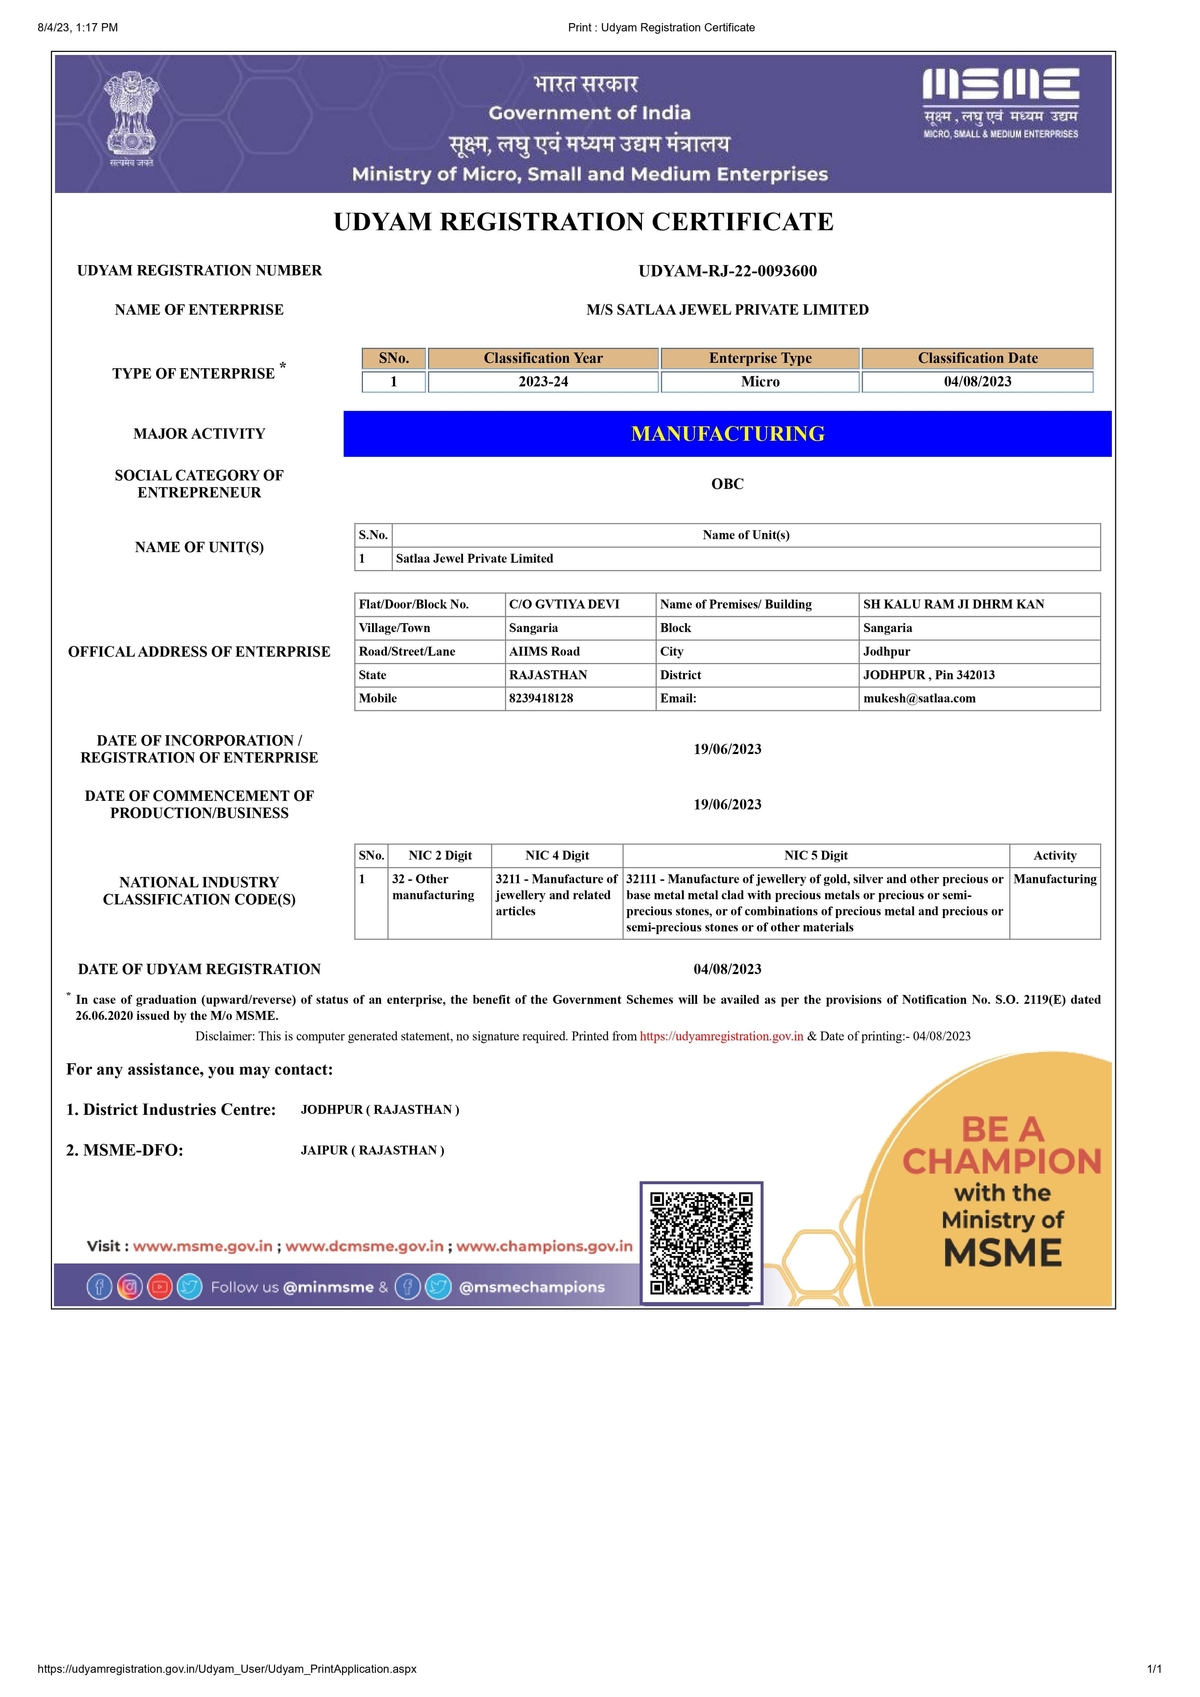 UDHYAM(MSME) Certificate